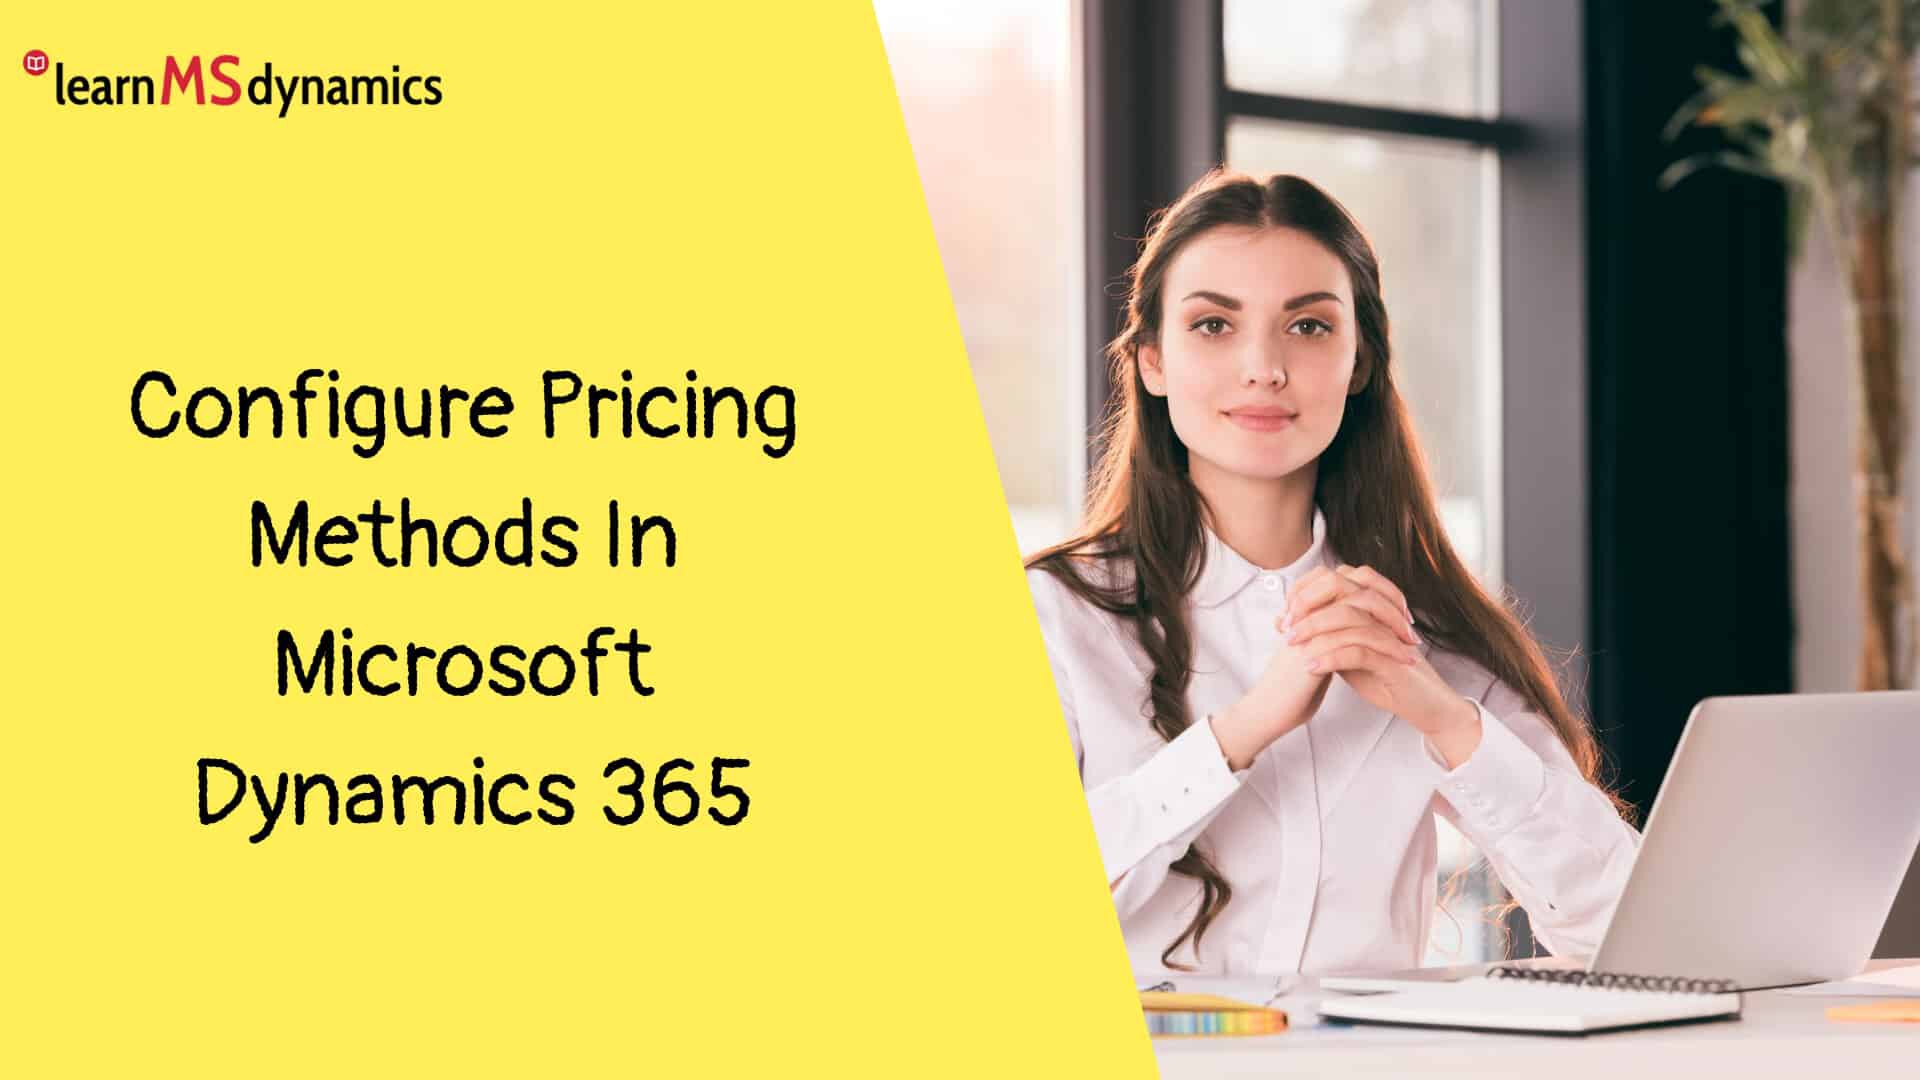 ms dynamics pricing